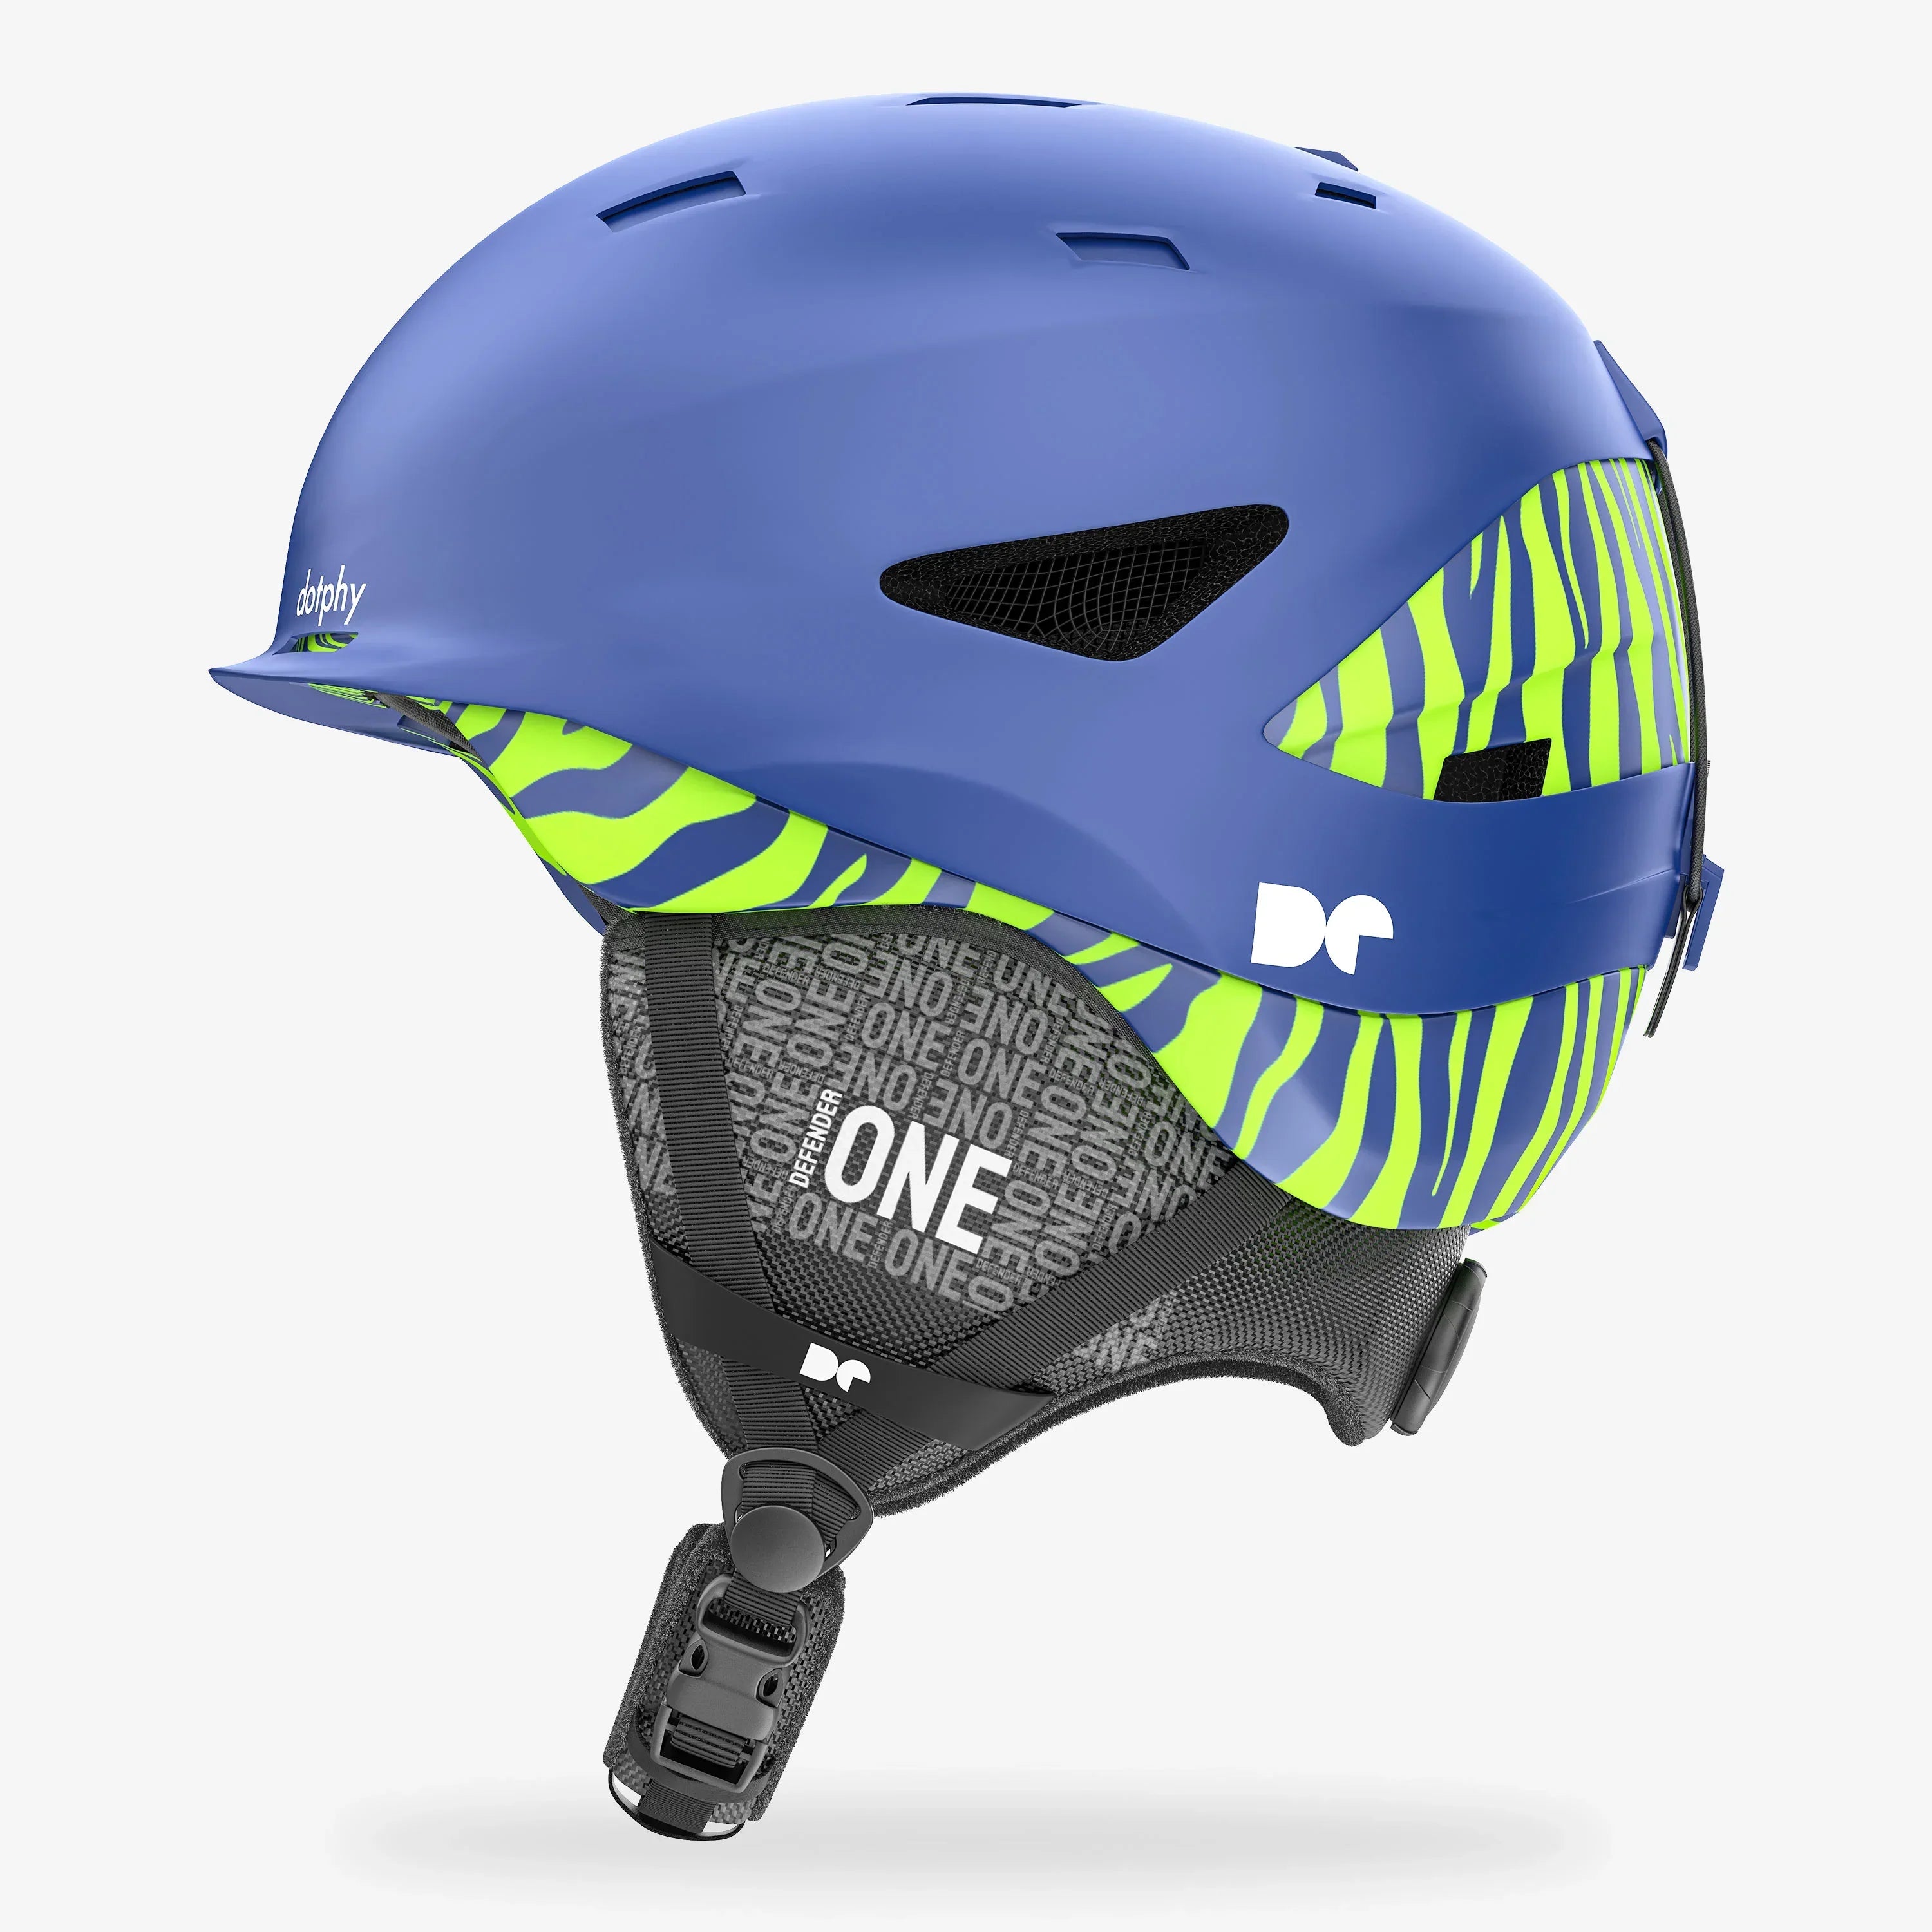 Defender One Royal Blue Ski Helmet